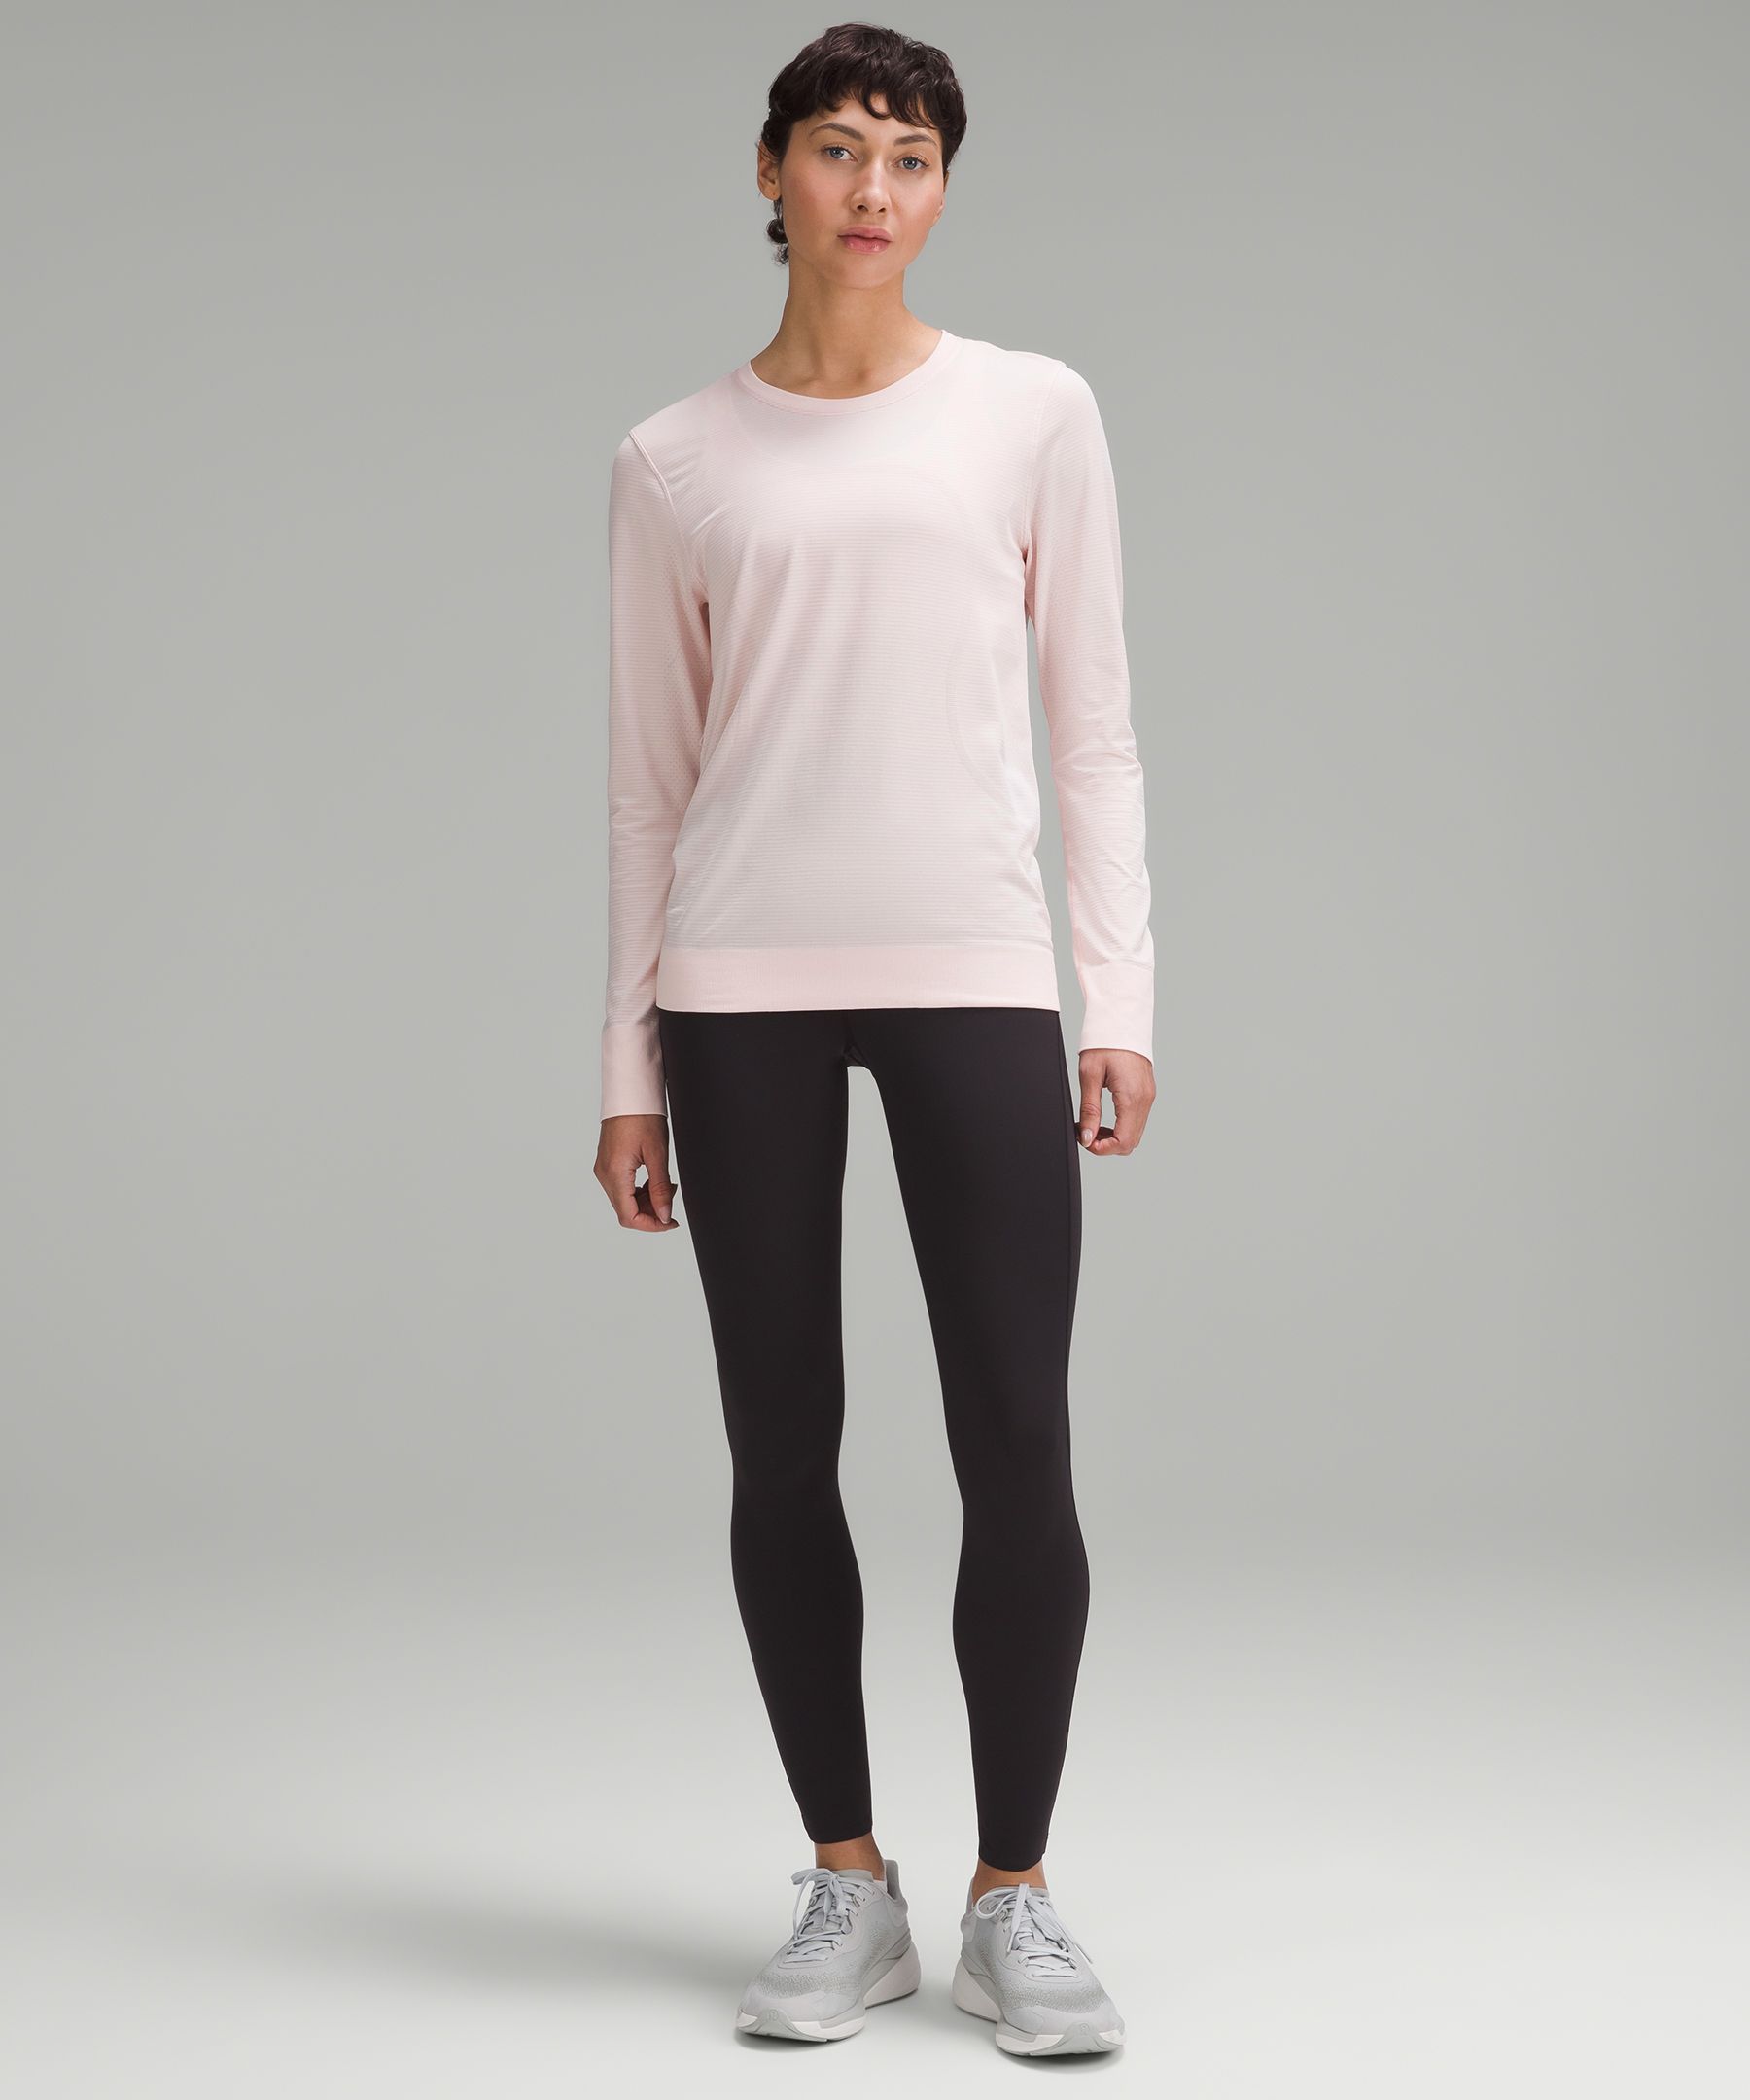 Swiftly Tech Long-Sleeve Shirt 2.0 *Race Length, Women's Long Sleeve  Shirts, lululemon